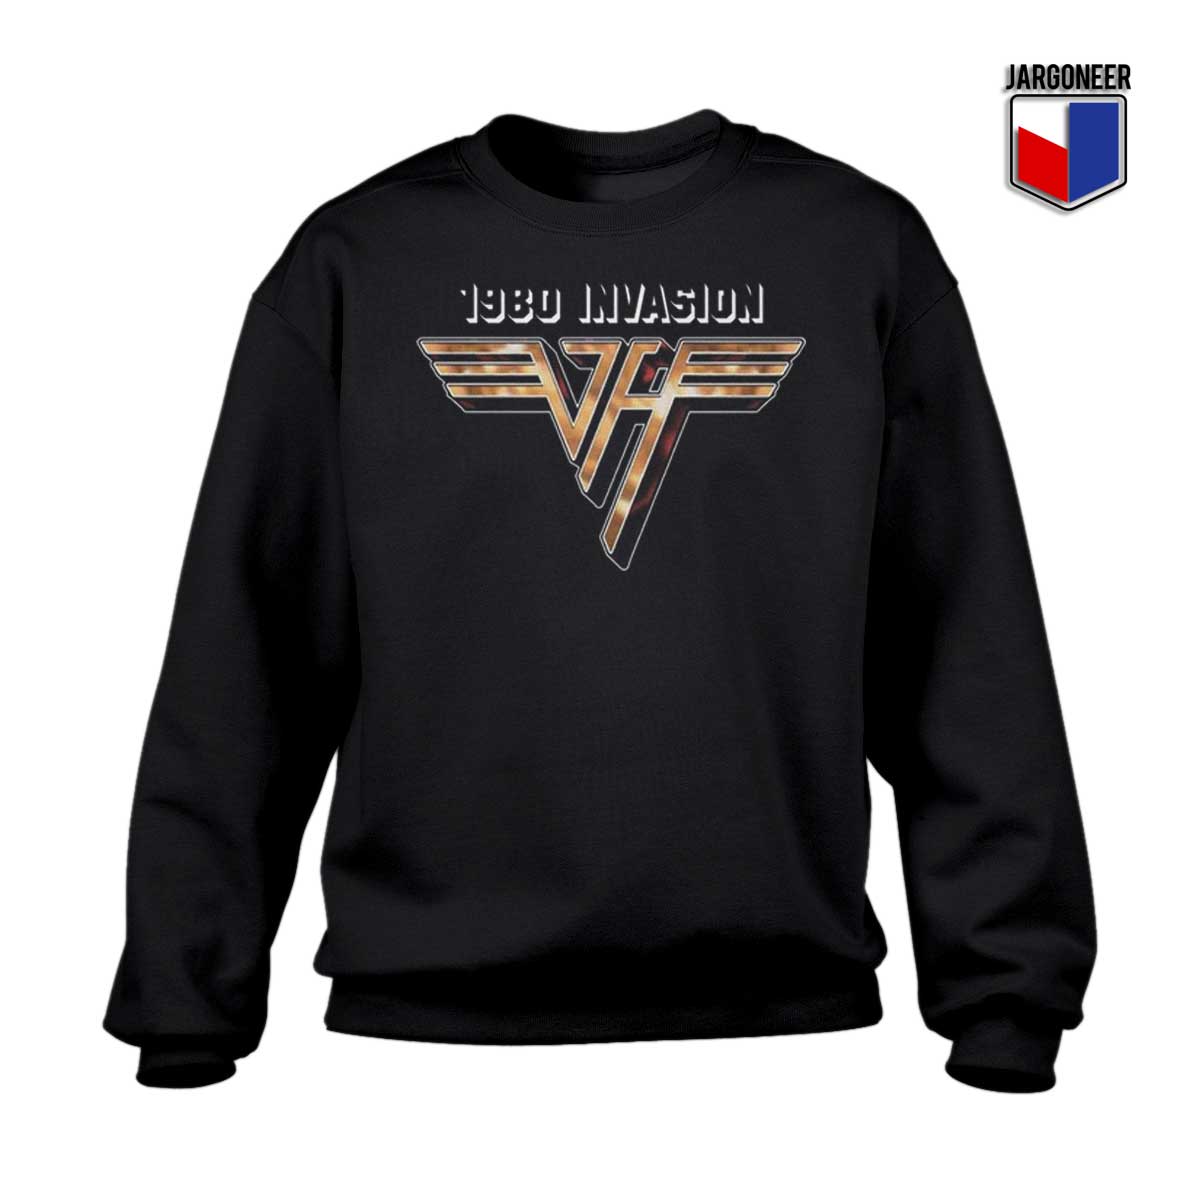 Van Halen 1980 Invasion Crewneck Sweatshirt - Shop Unique Graphic Cool Shirt Designs